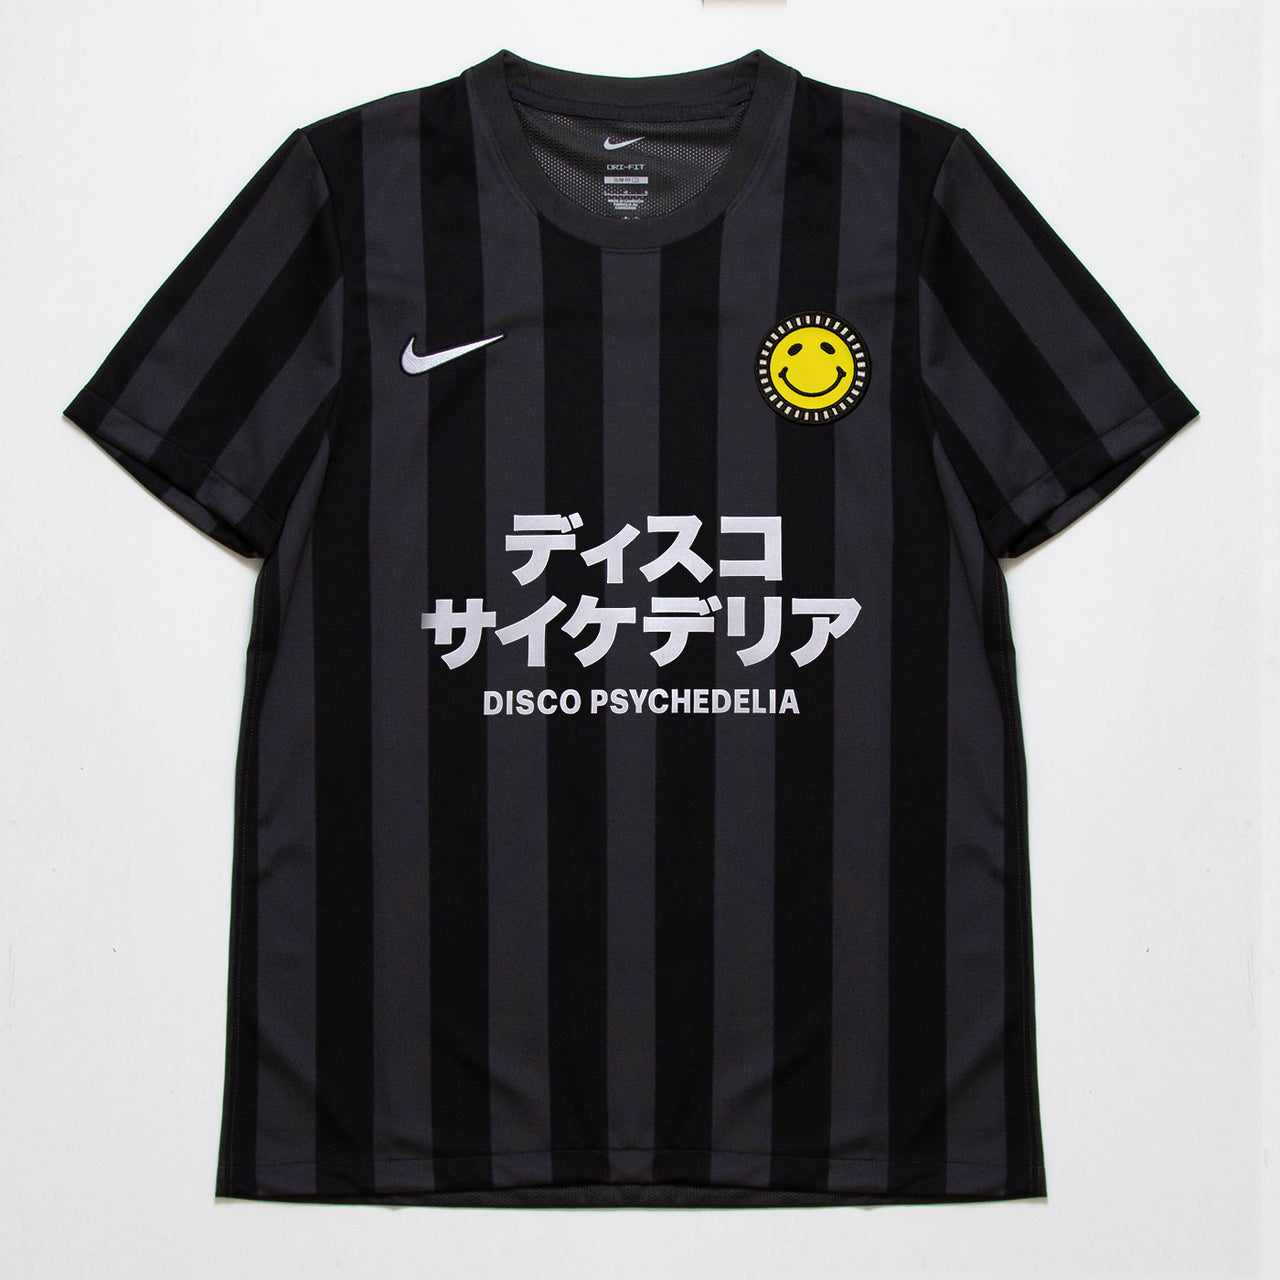 Disco Psychedelia FC Striped Division - Jersey - Black Grey